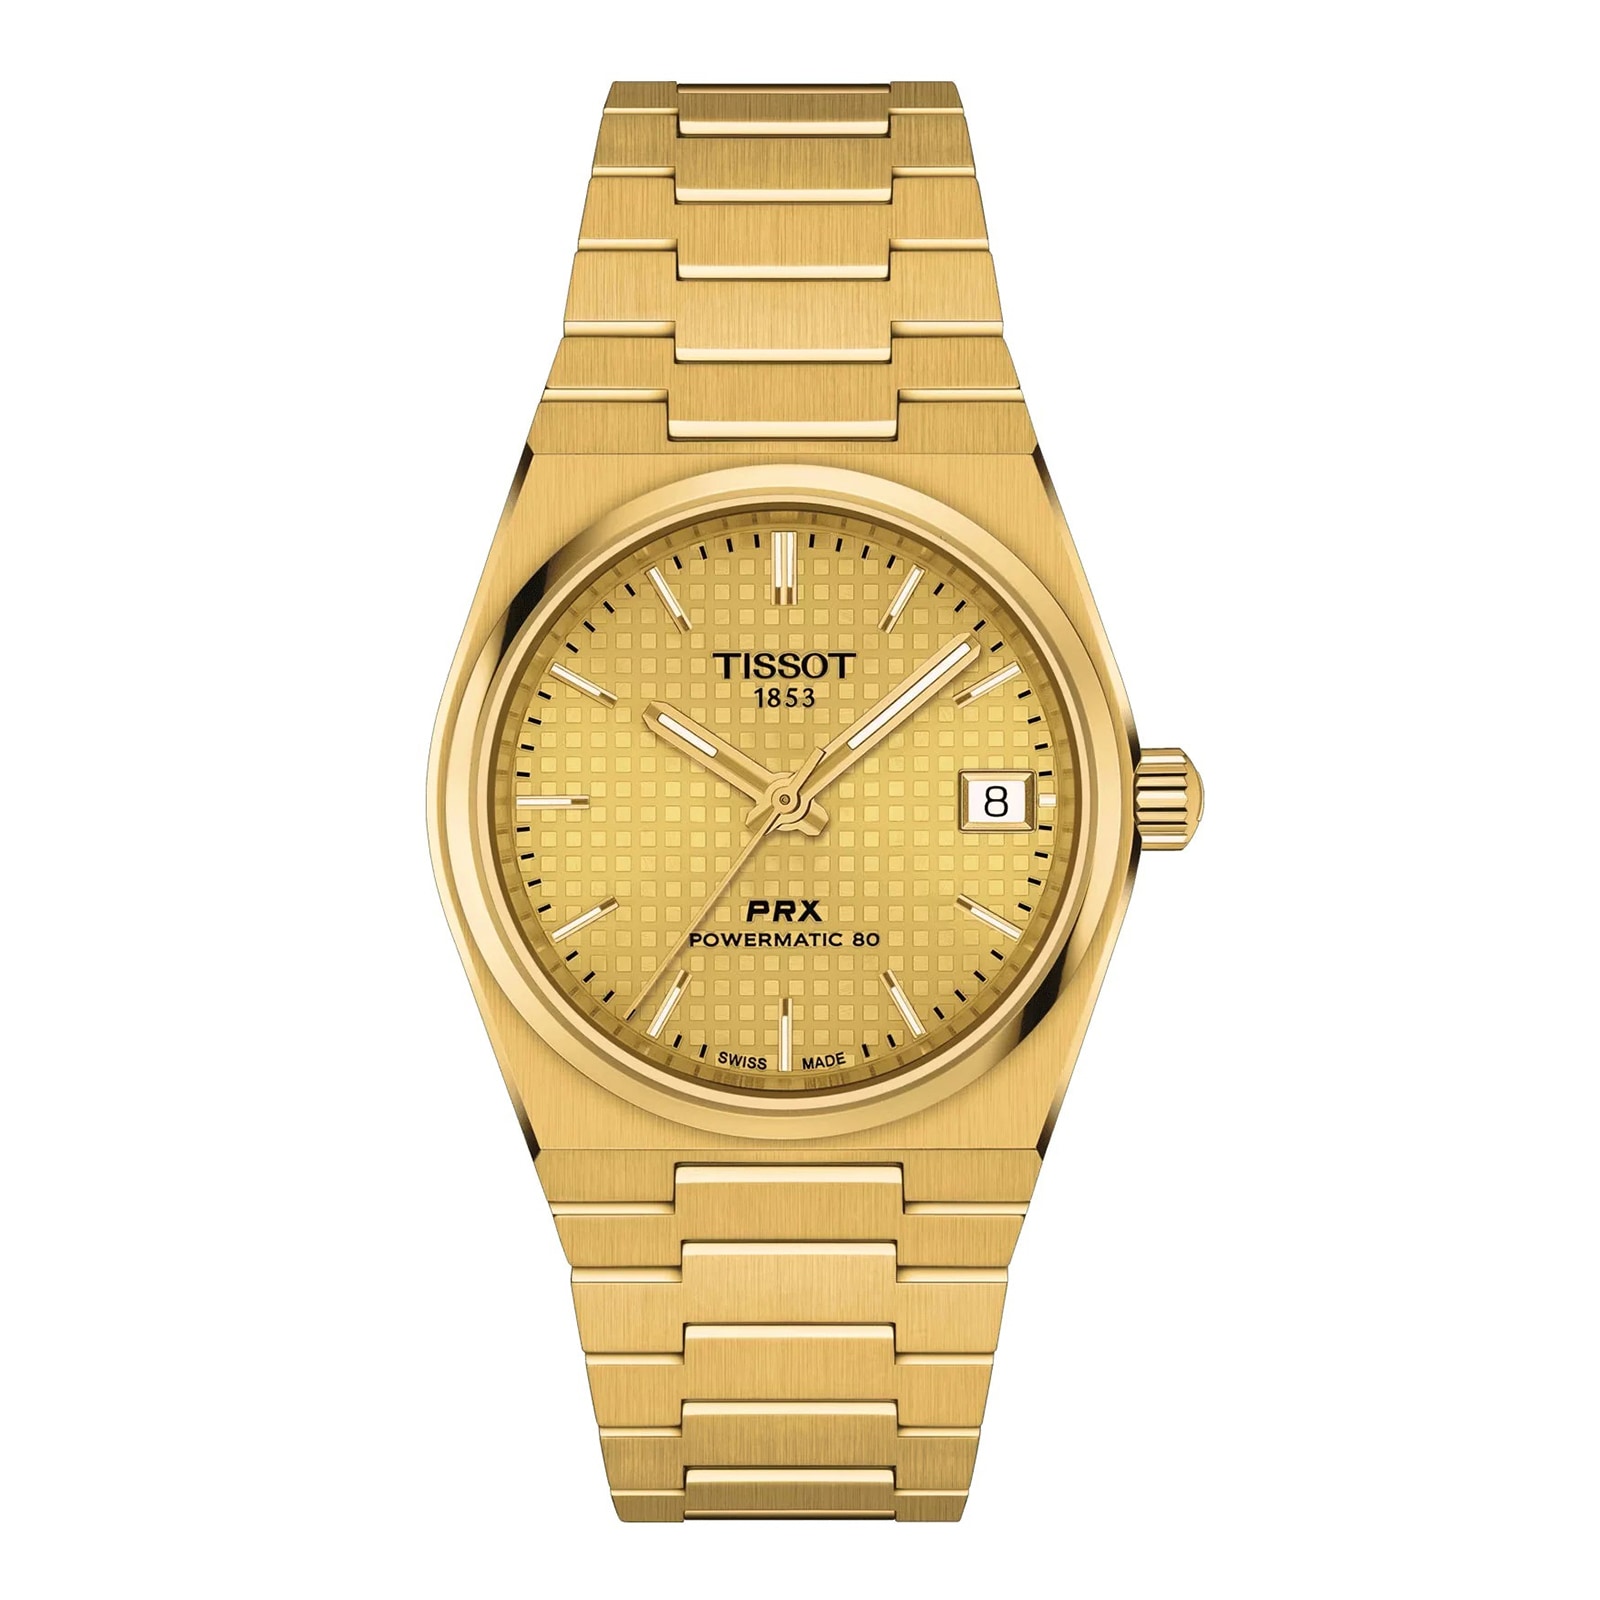 Photos - Wrist Watch TISSOT PRX Powermatic 80 35mm Unisex Watch Gold 